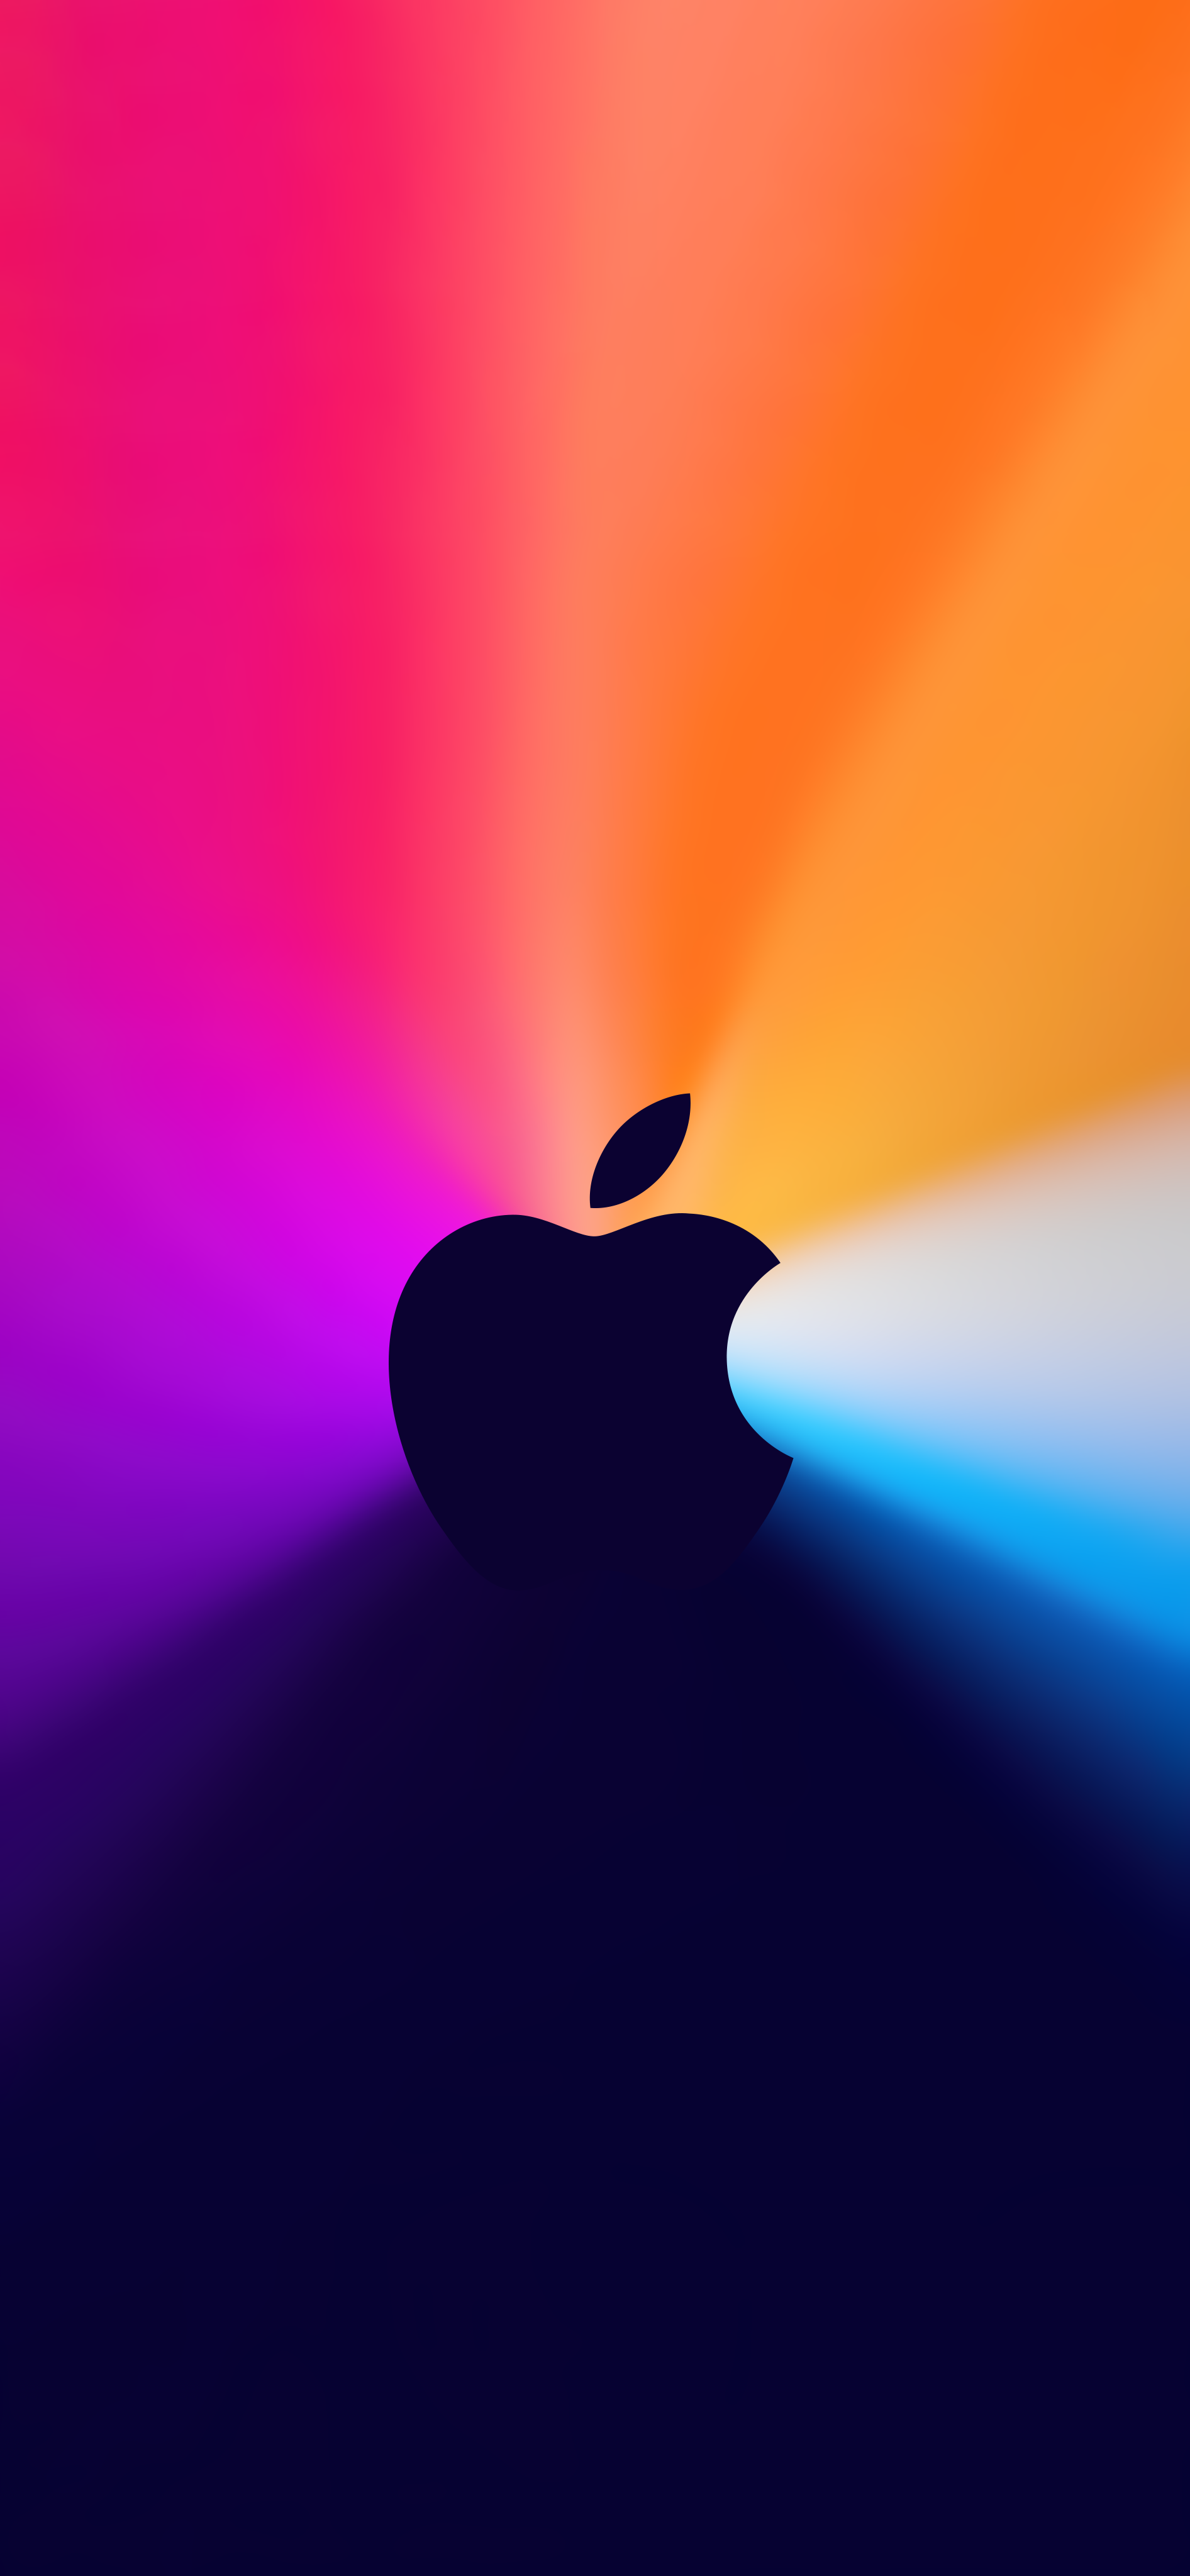 Apple-One-More-Thing-Event-wallpaper-idownloadblog-FlareZephyr-iPhone-logo